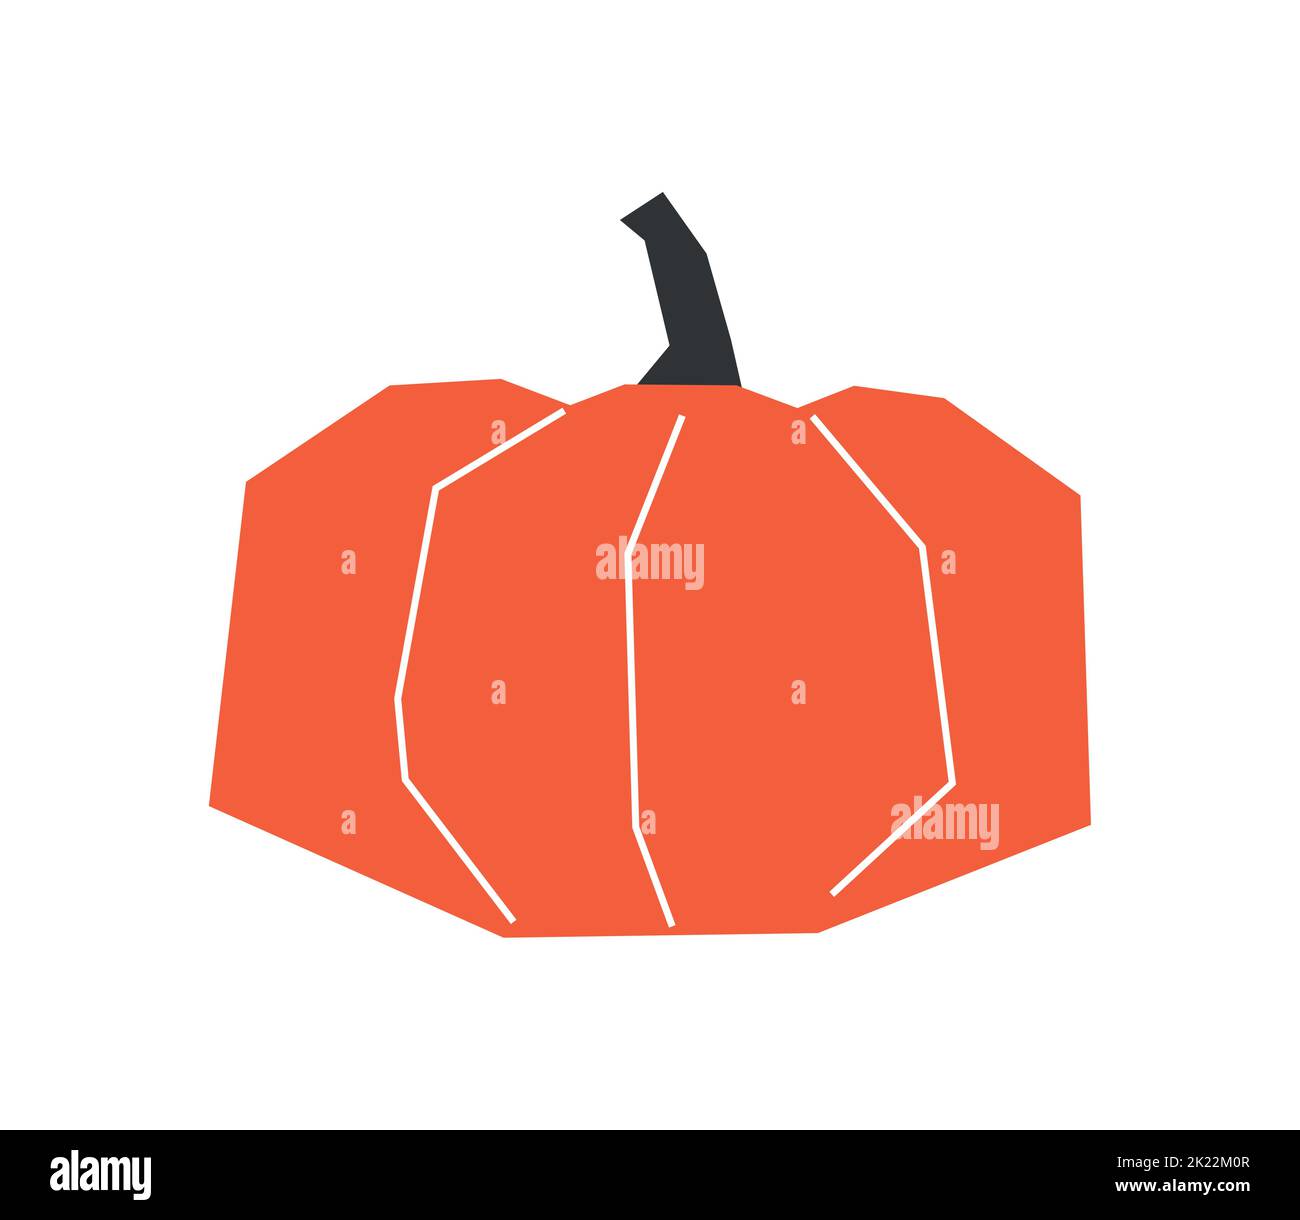 Vector isolated illustration with botanical element - fresh big max pumpkin. Orange vegetarian symbol of autumn - squash. Decorative geometric hallowe Stock Vector